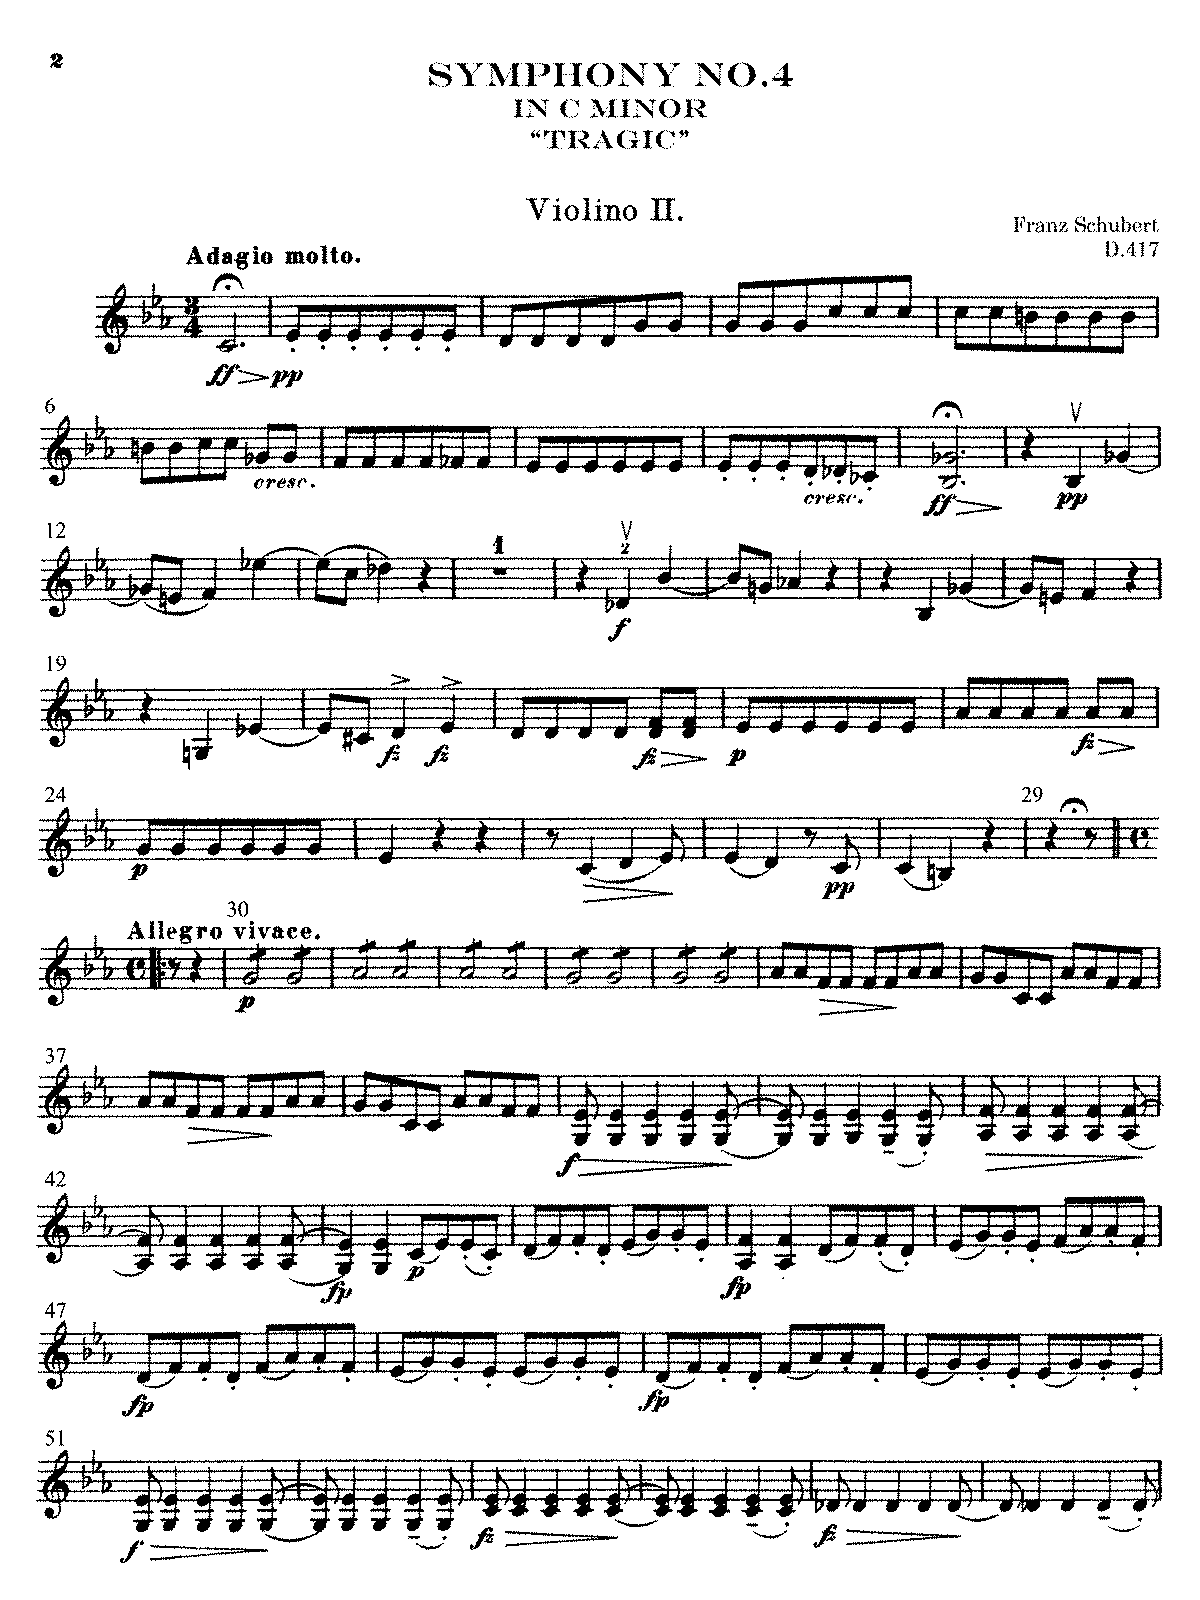 franz schubert symphony no 5 in b flat major